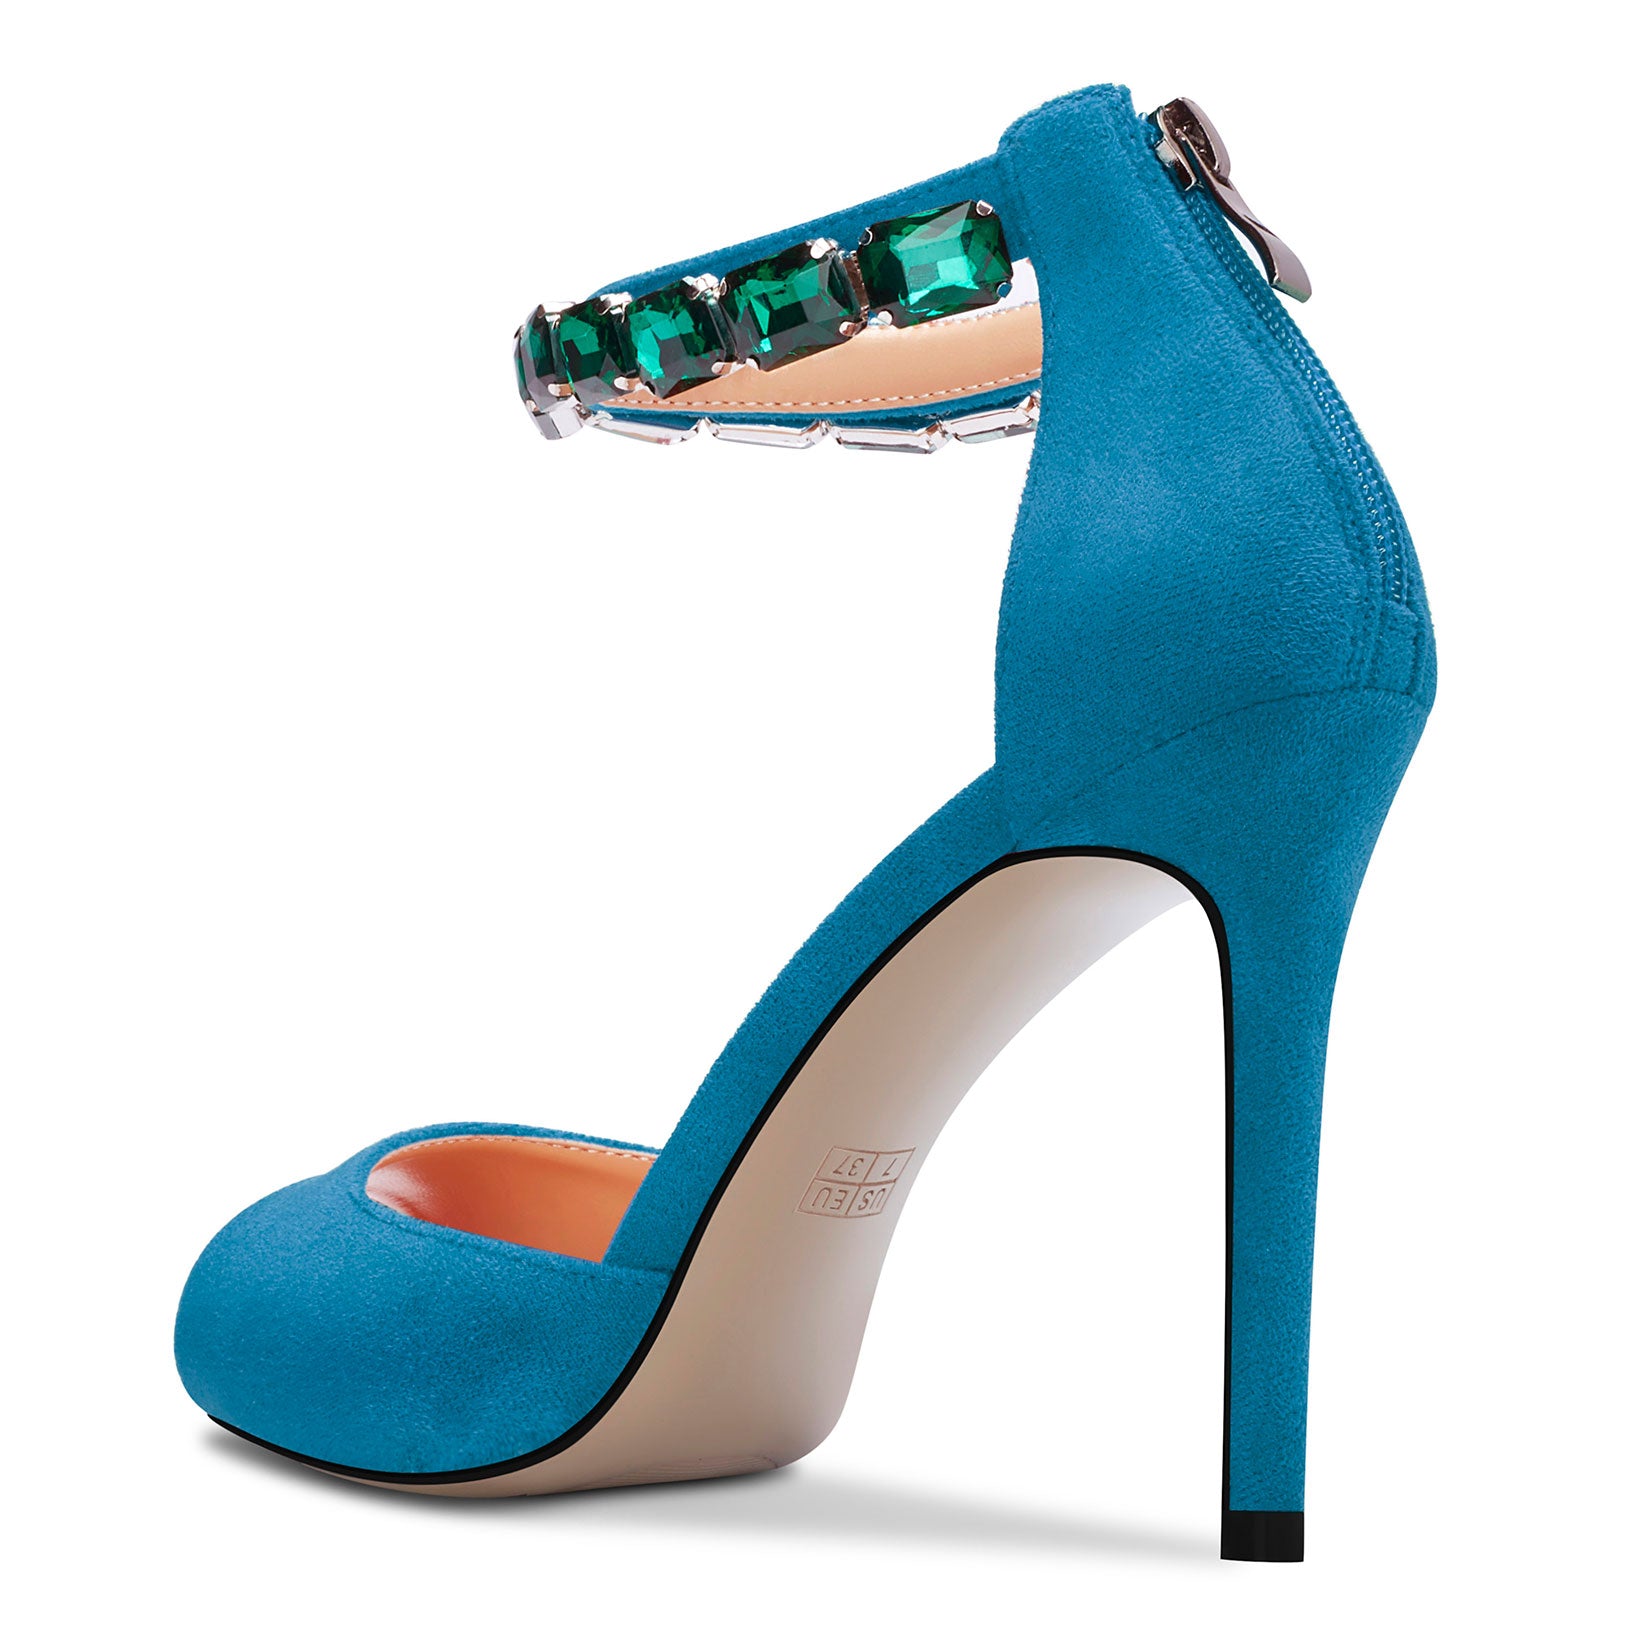 Turquoise Gloria Kitten Heel Slingback Shoes - Beatrice von Tresckow -  Beatrice von Tresckow Designs